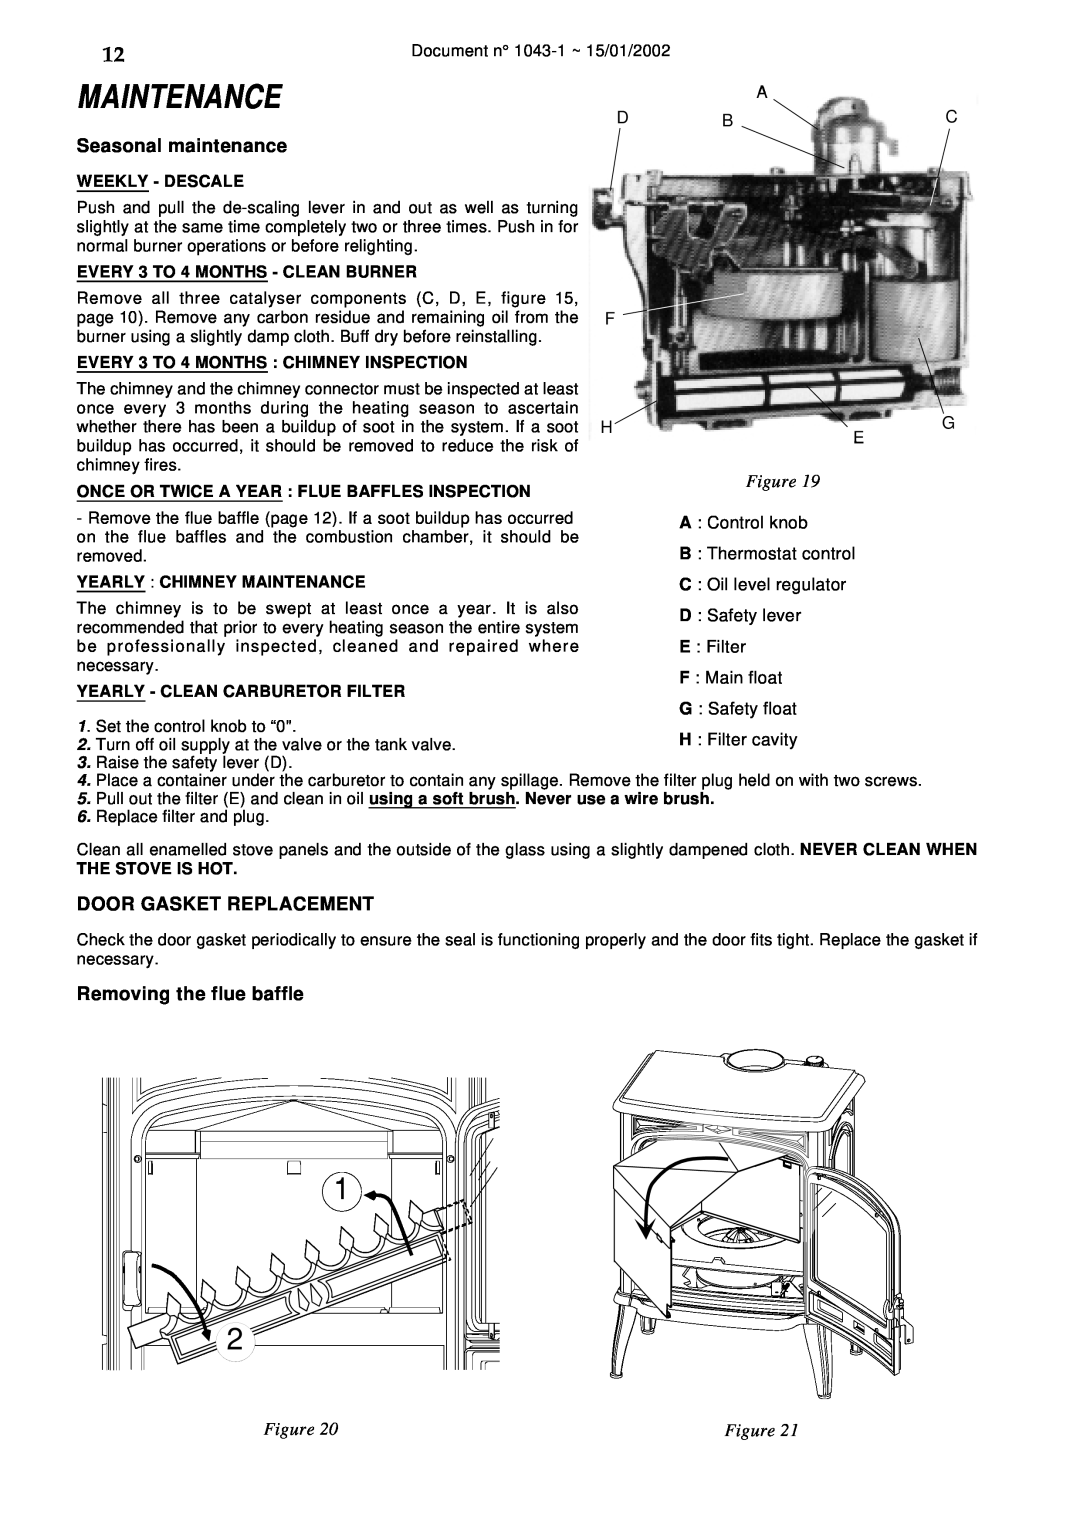 Napoleon Fireplaces SAVOY OS11 manual Maintenance, Seasonal maintenance, Door Gasket Replacement, Removing the flue baffle 